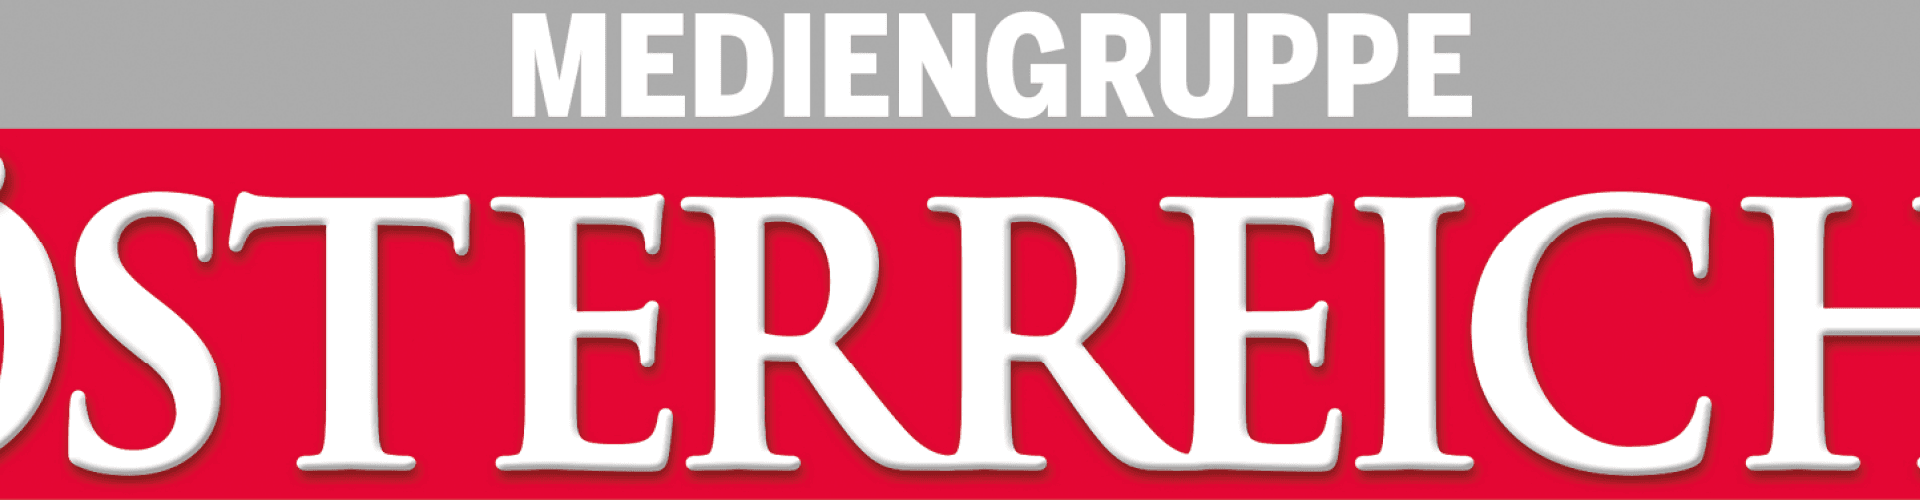 Mediengruppe "Österreich" GmbH cover